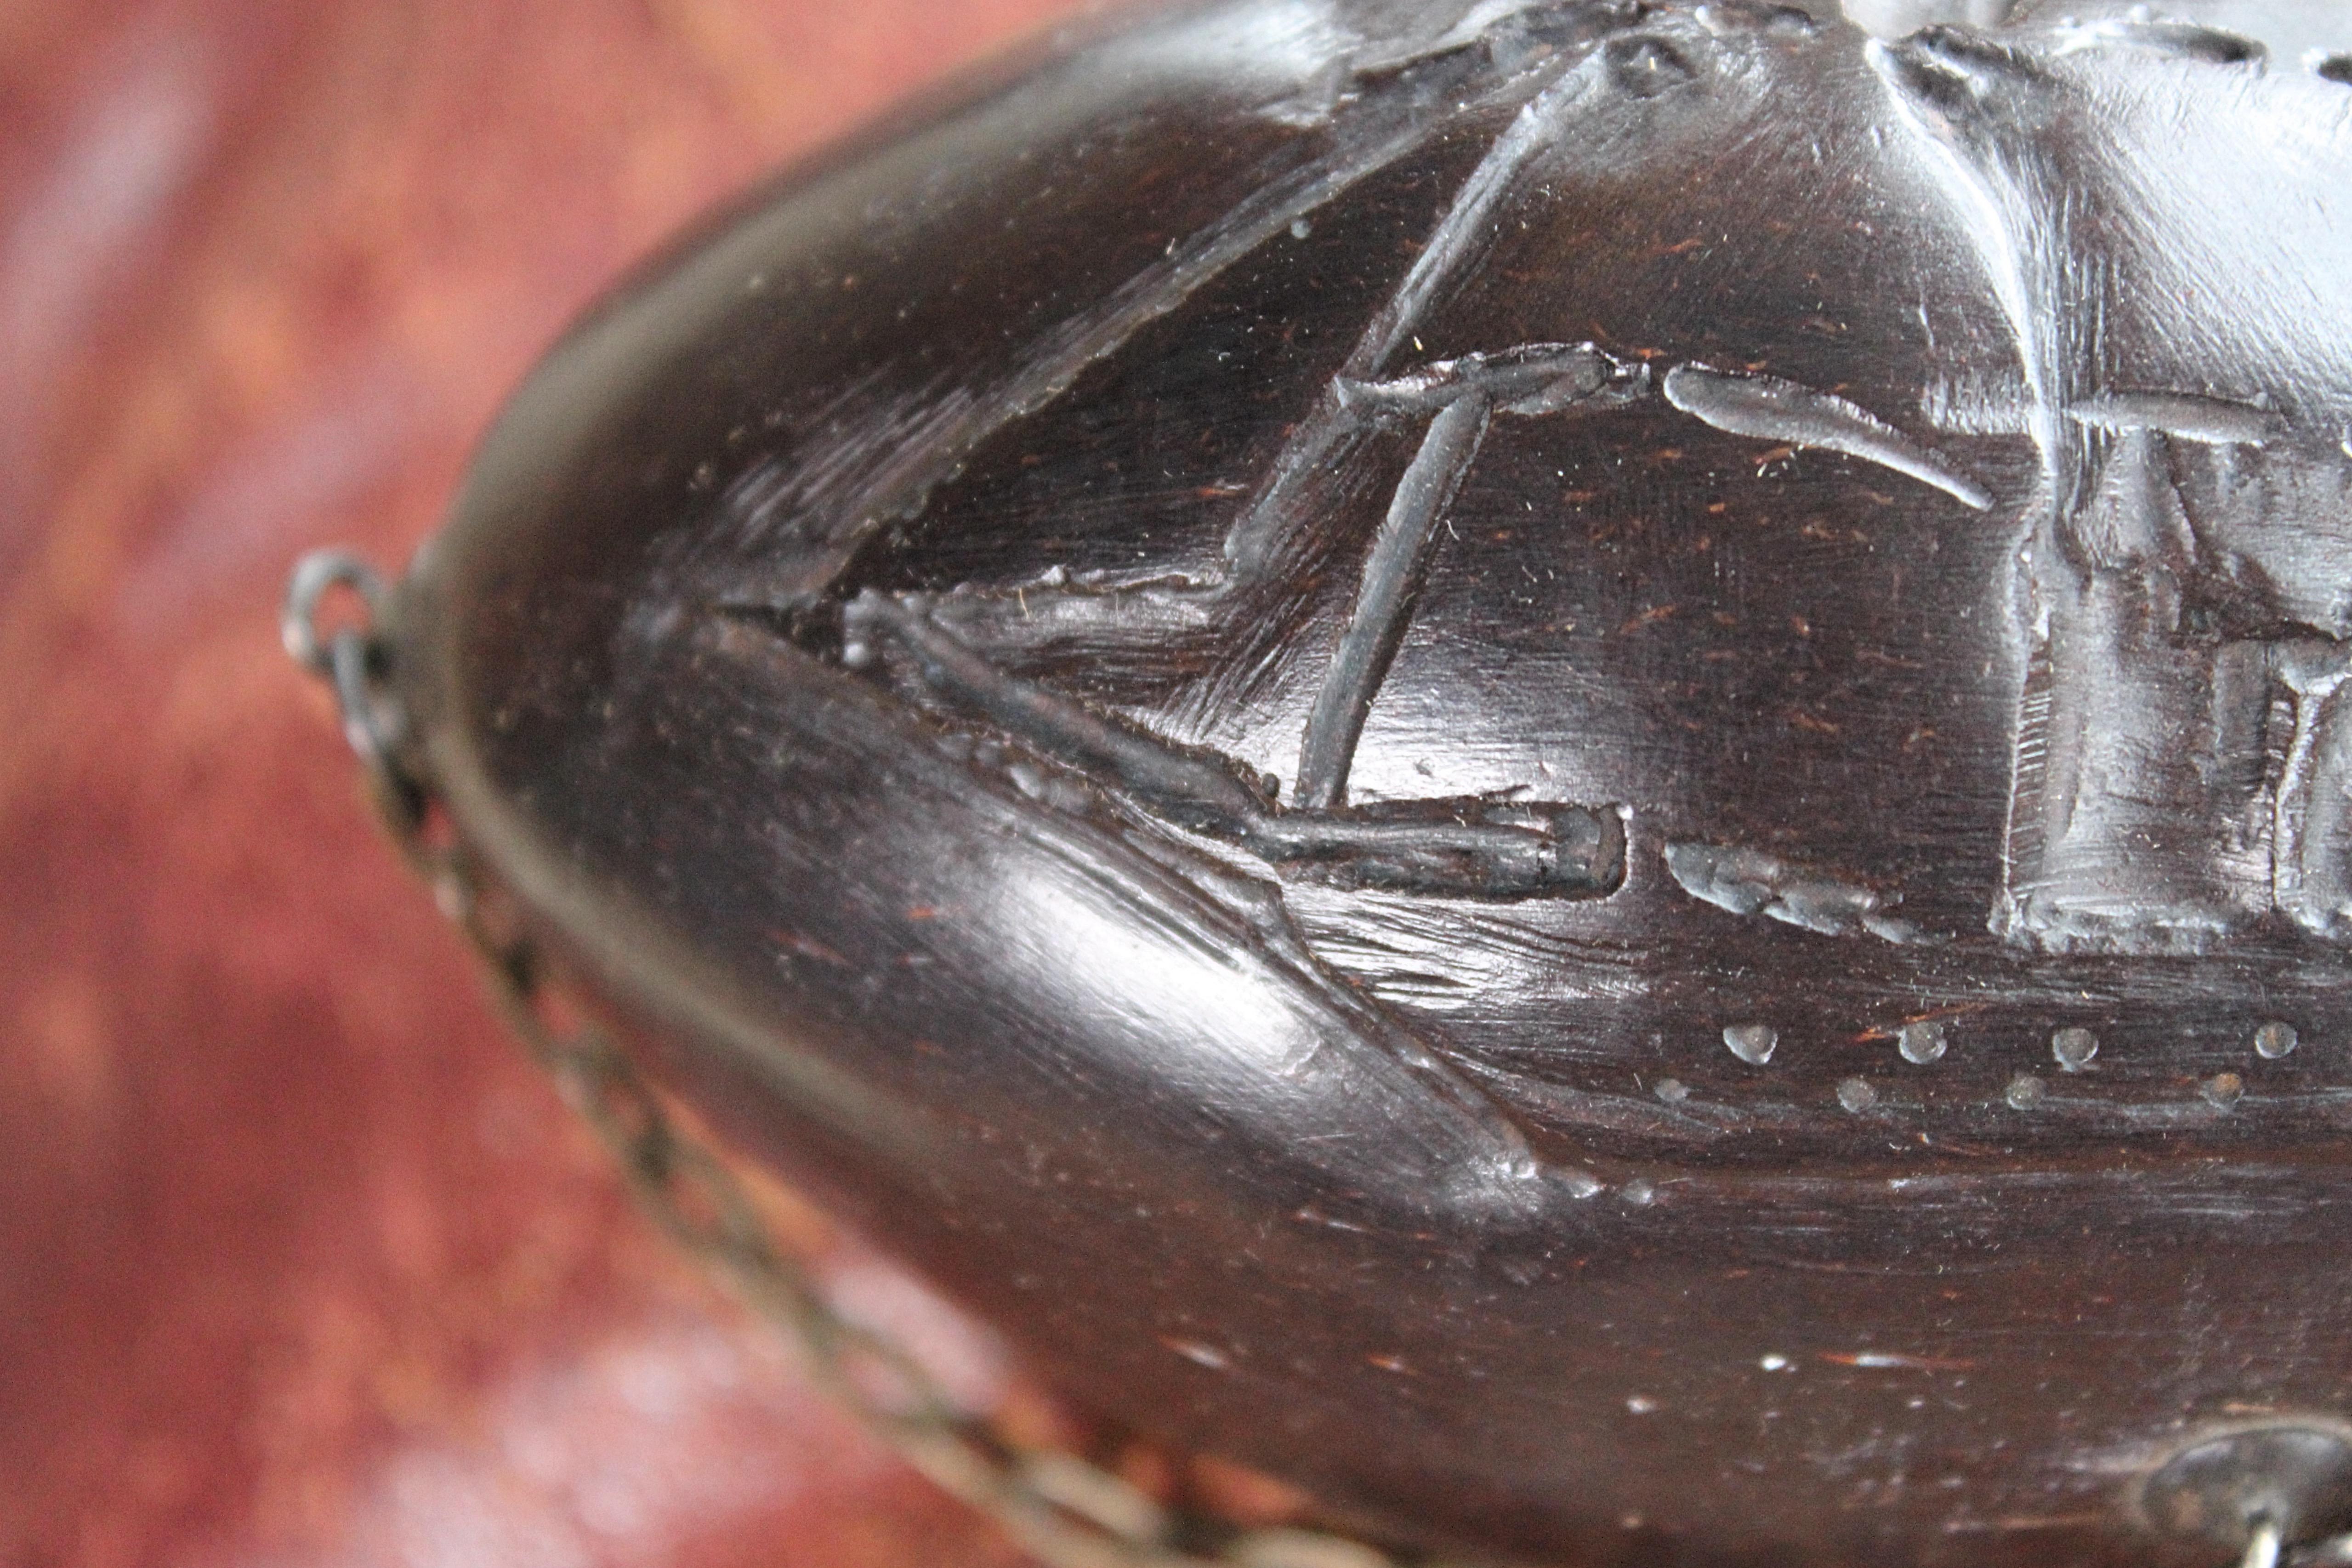 Natural Fiber Early 19th C Maritime Sailor's Coconut “Bugbear” Memento Mori Gun Powder Flask